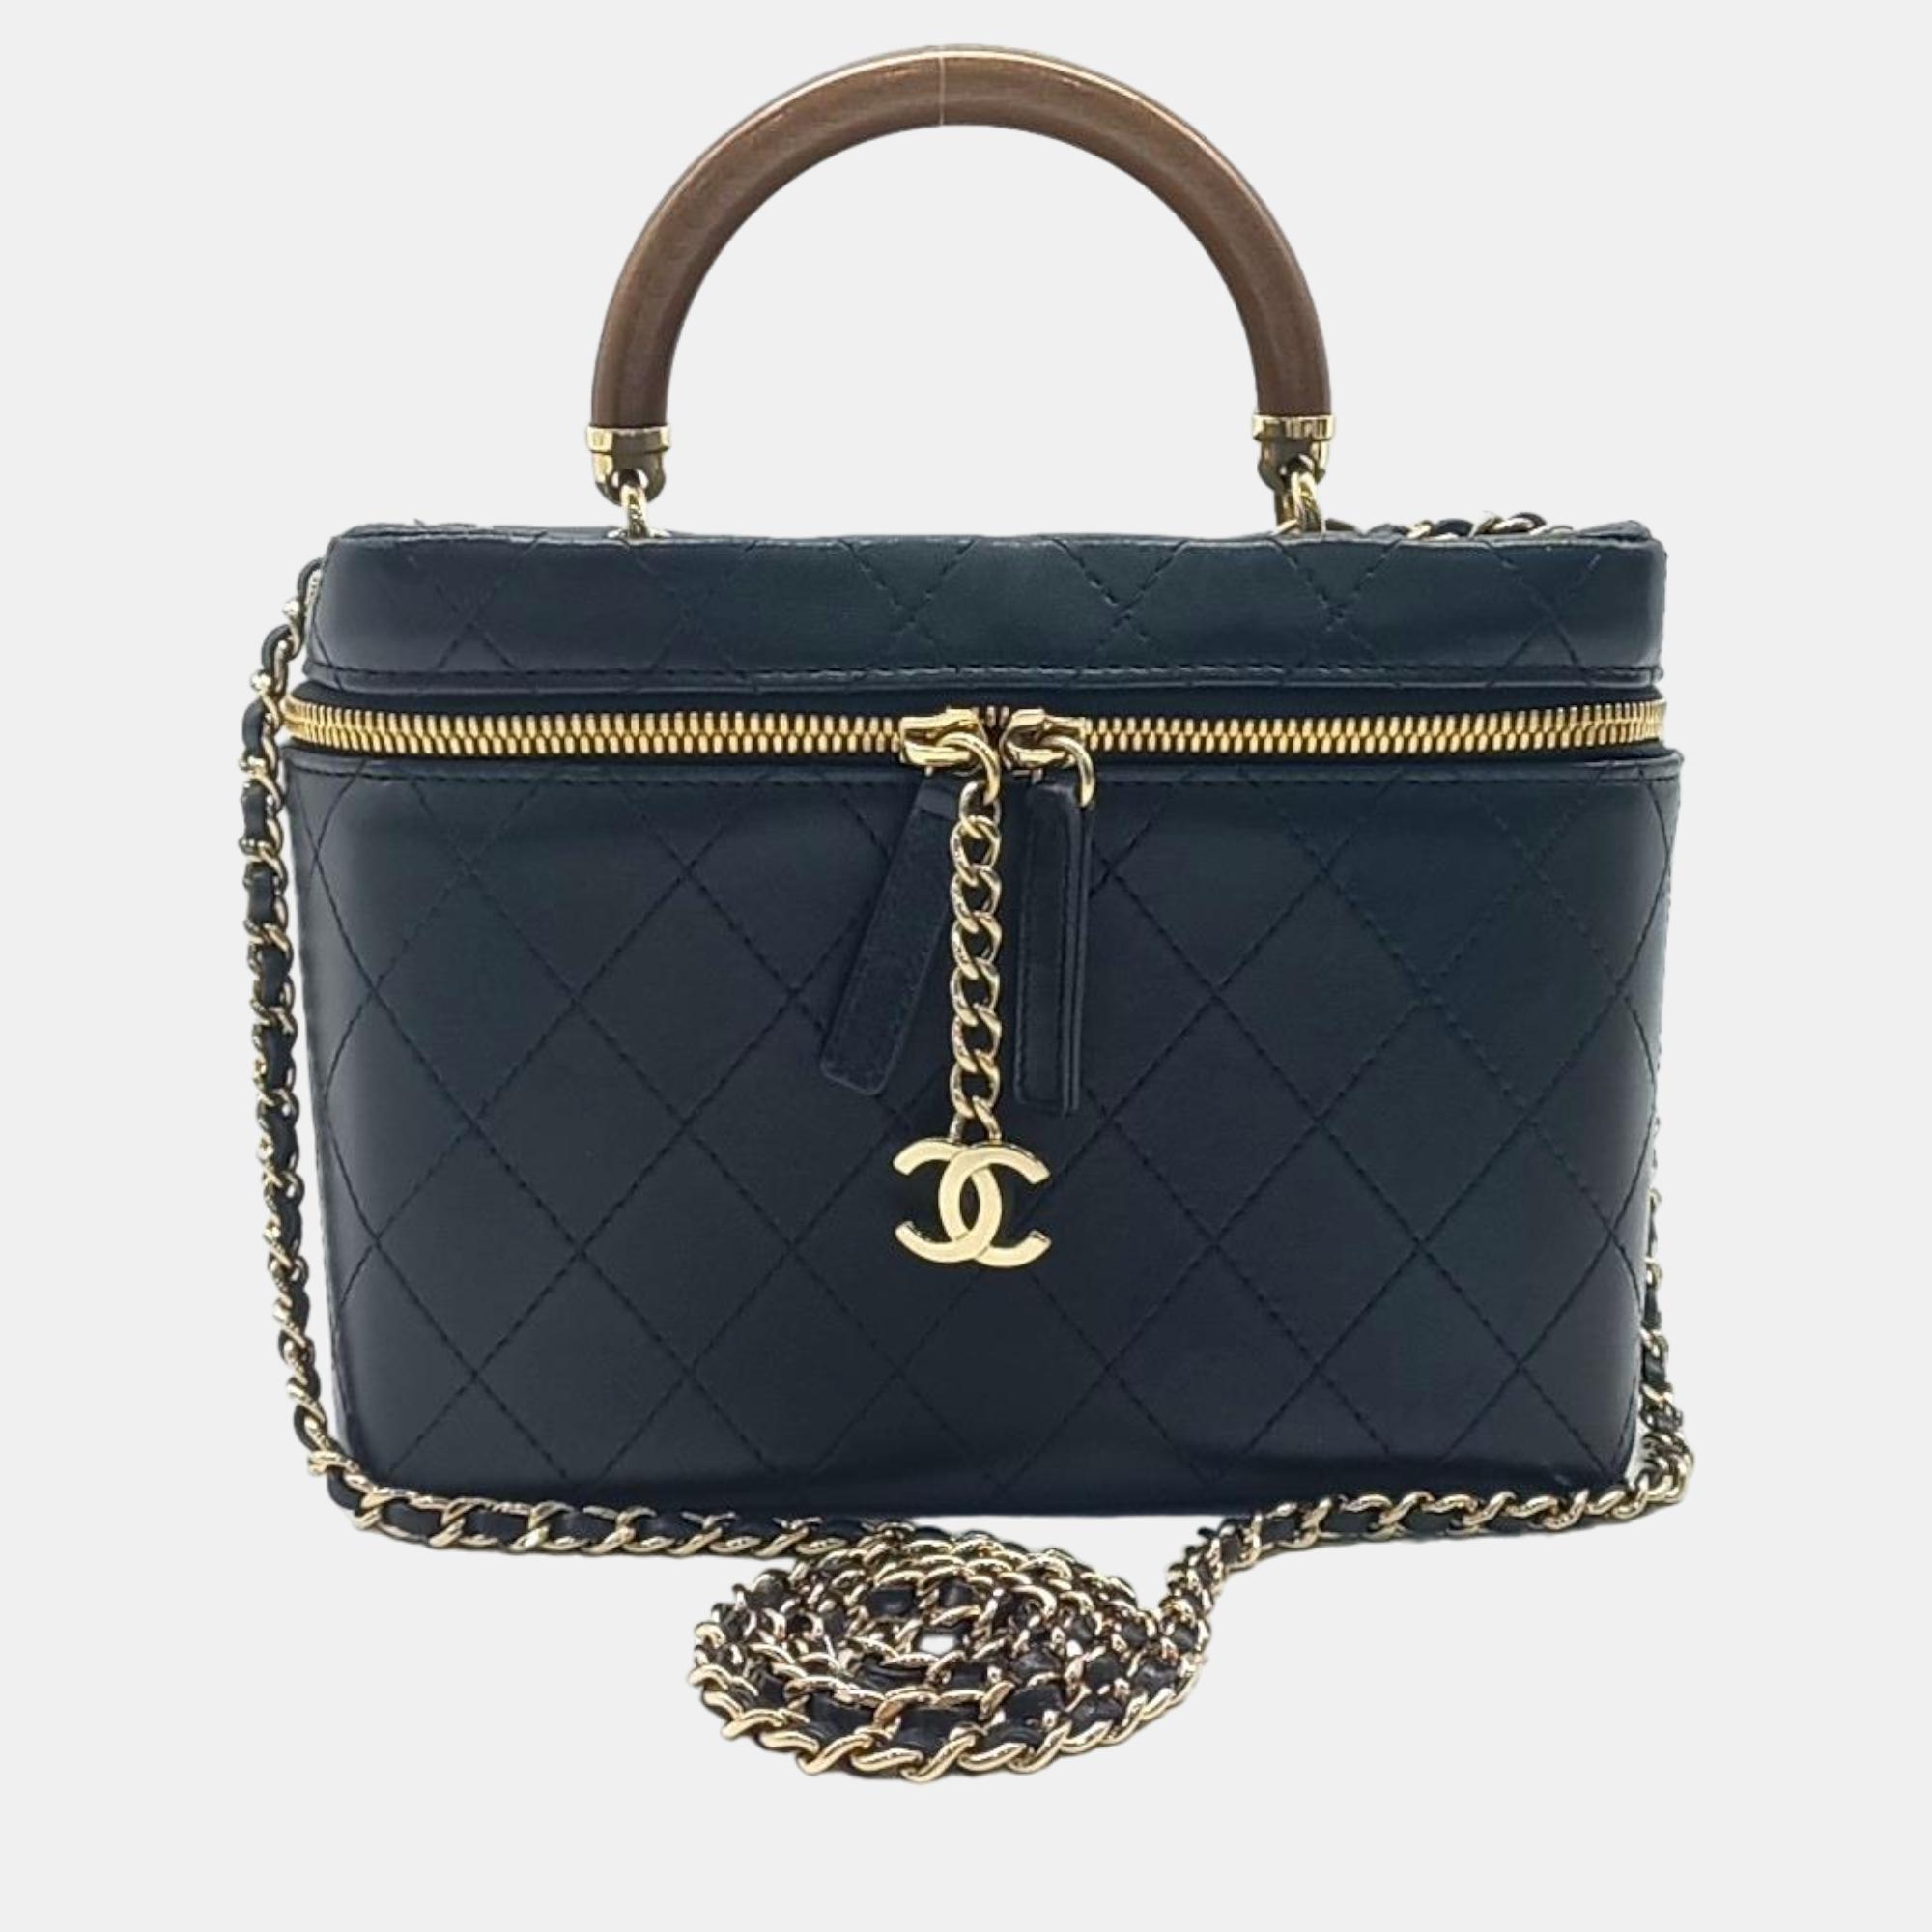 Chanel black leather vanity cosmetic bag